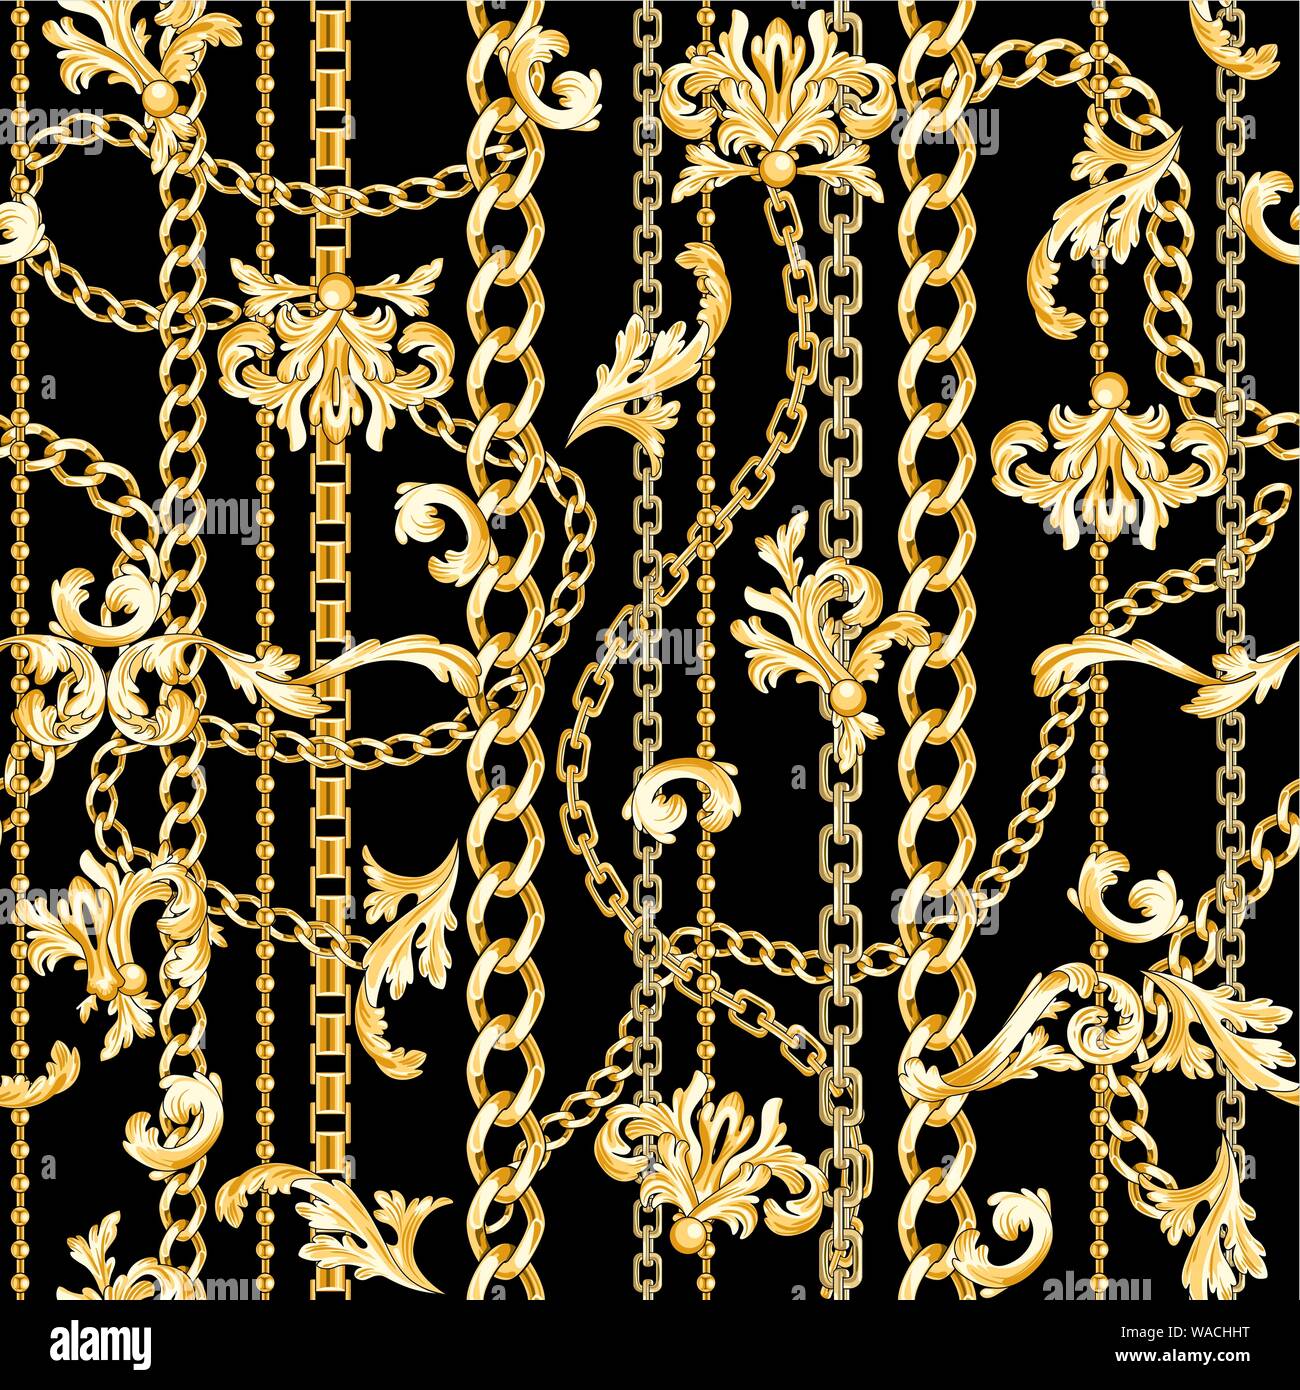 Gold baroque elements Stock Vector